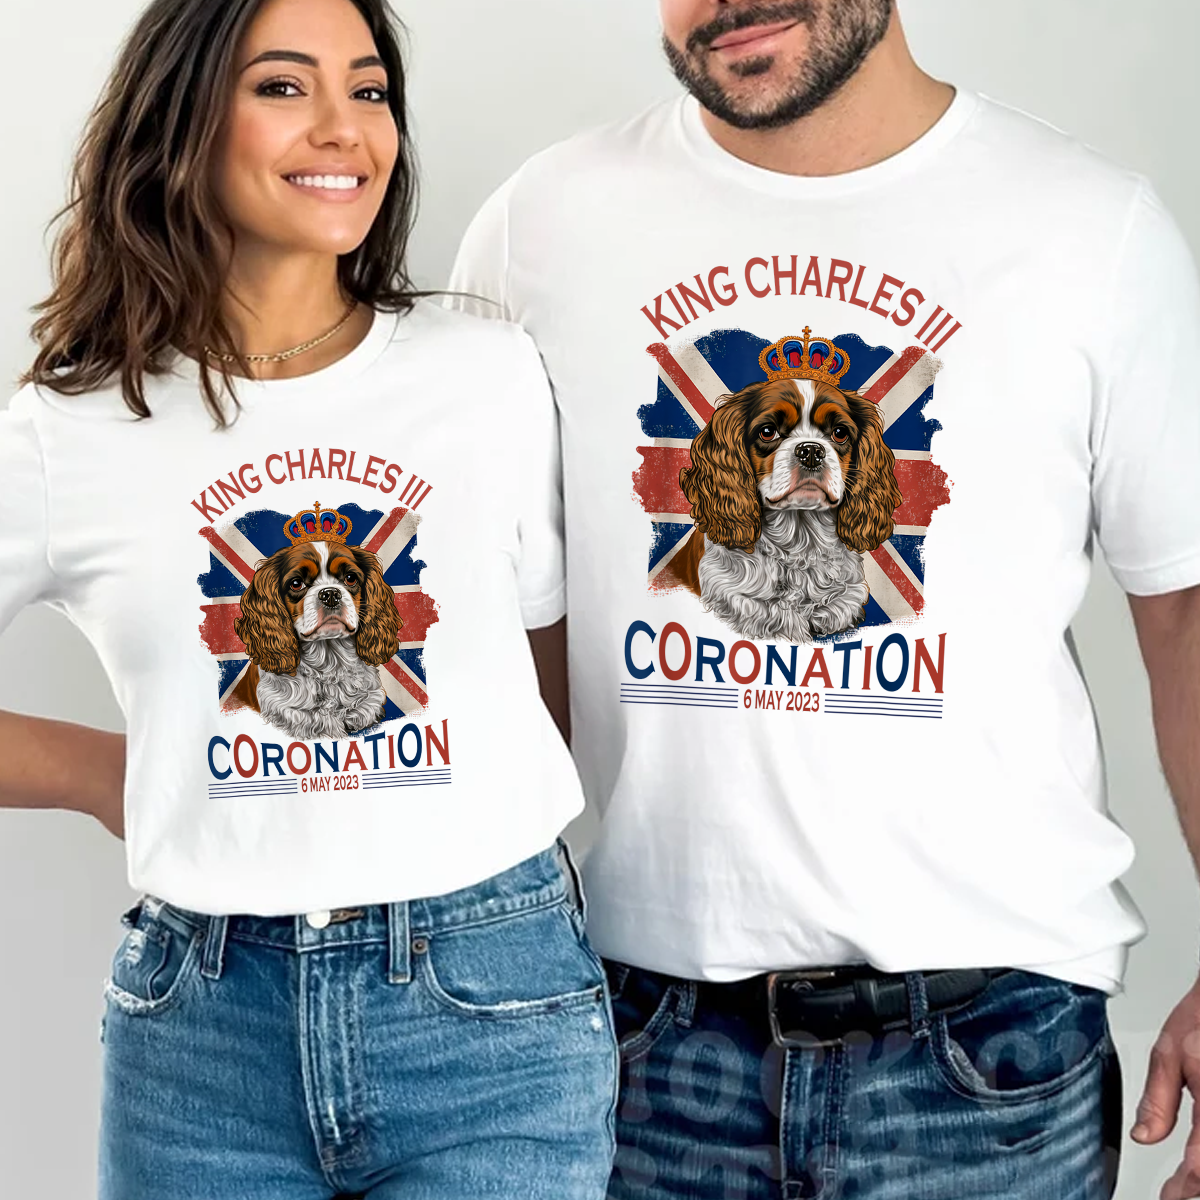 King Charles III Coronation Day T-Shirt - Kids &amp; Adults